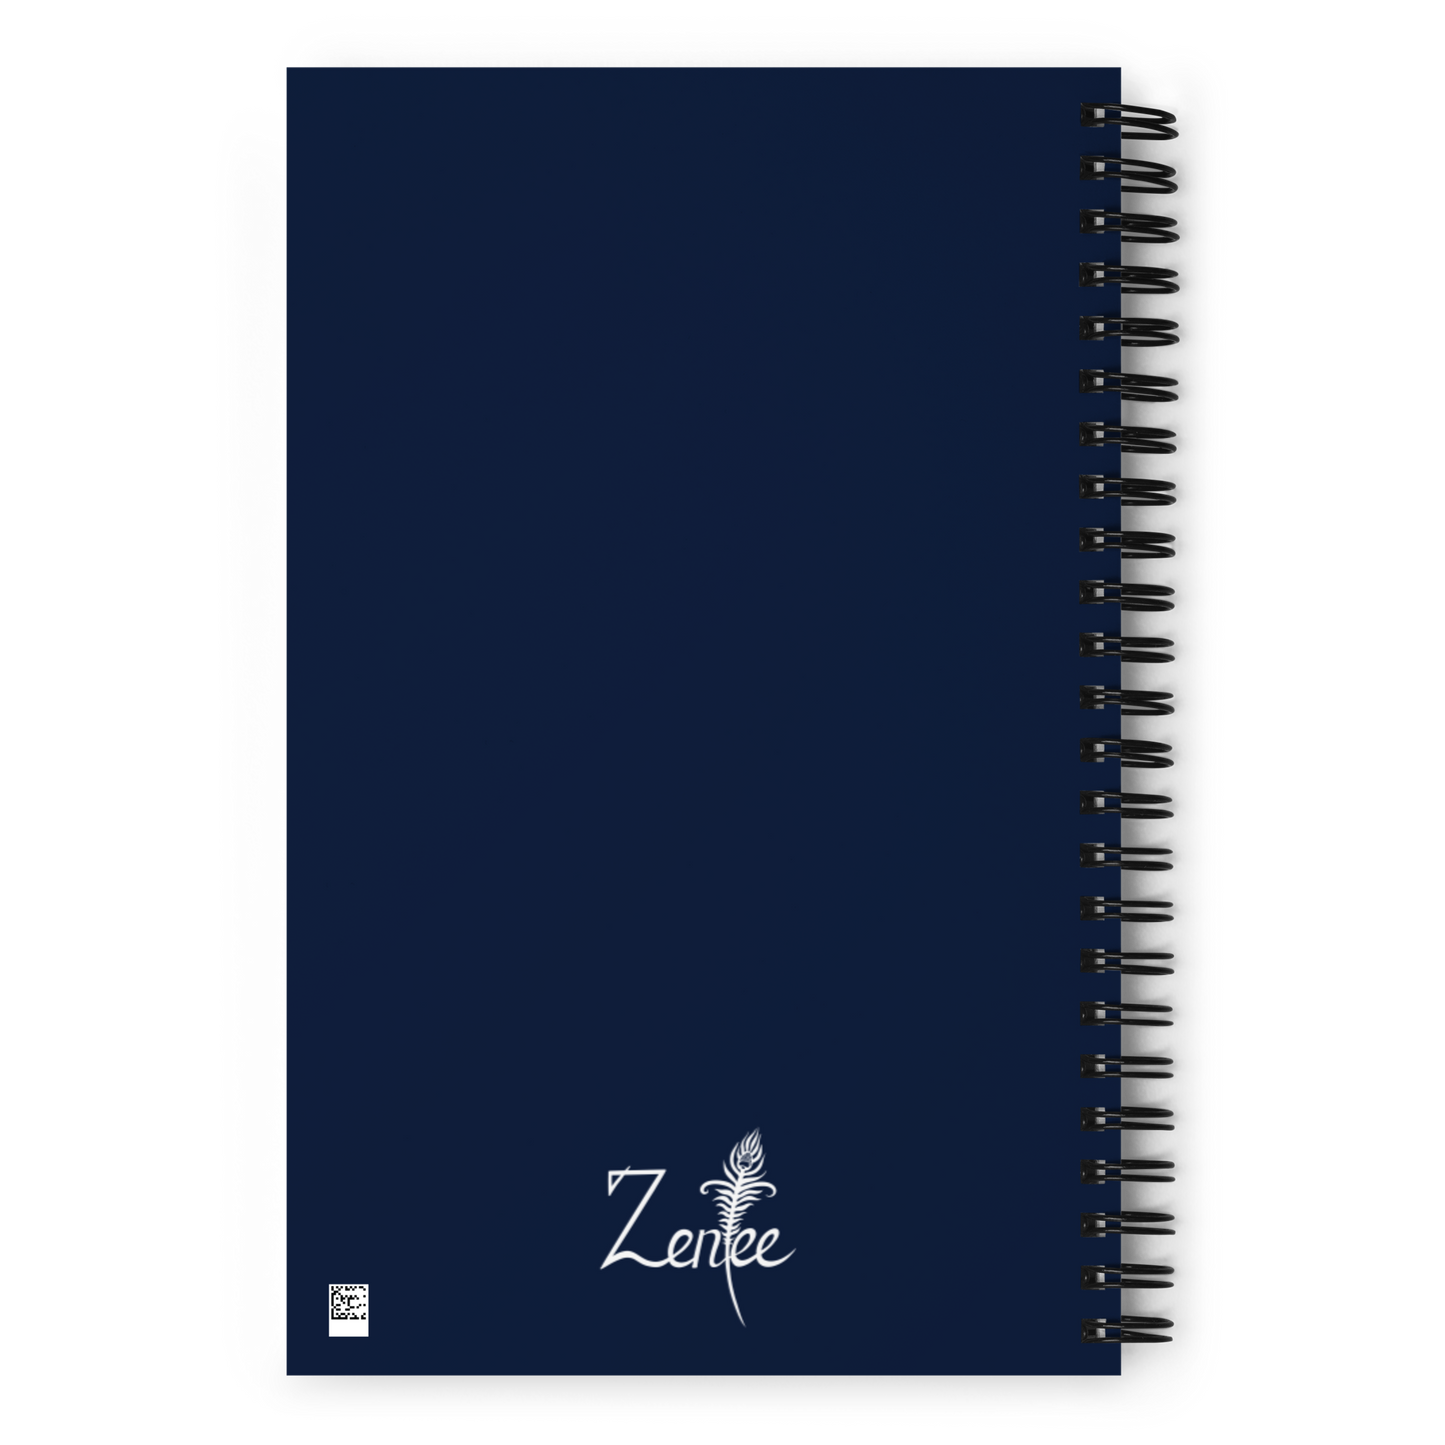 ABCD - Spiral notebook